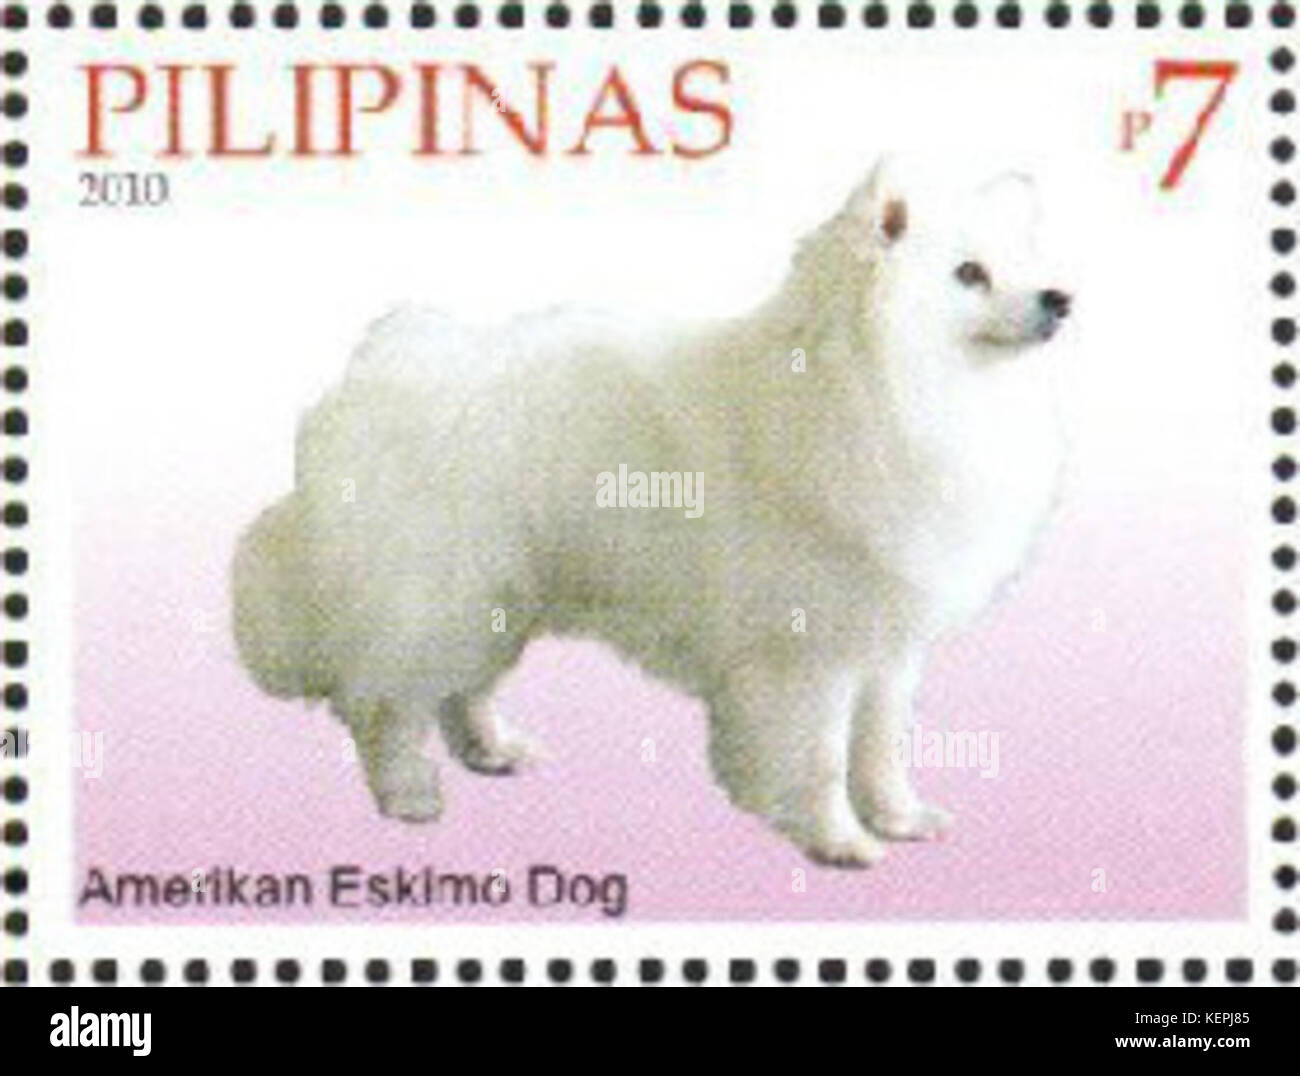 American Eskimo Dog Canis lupus familiaris Stock Photo